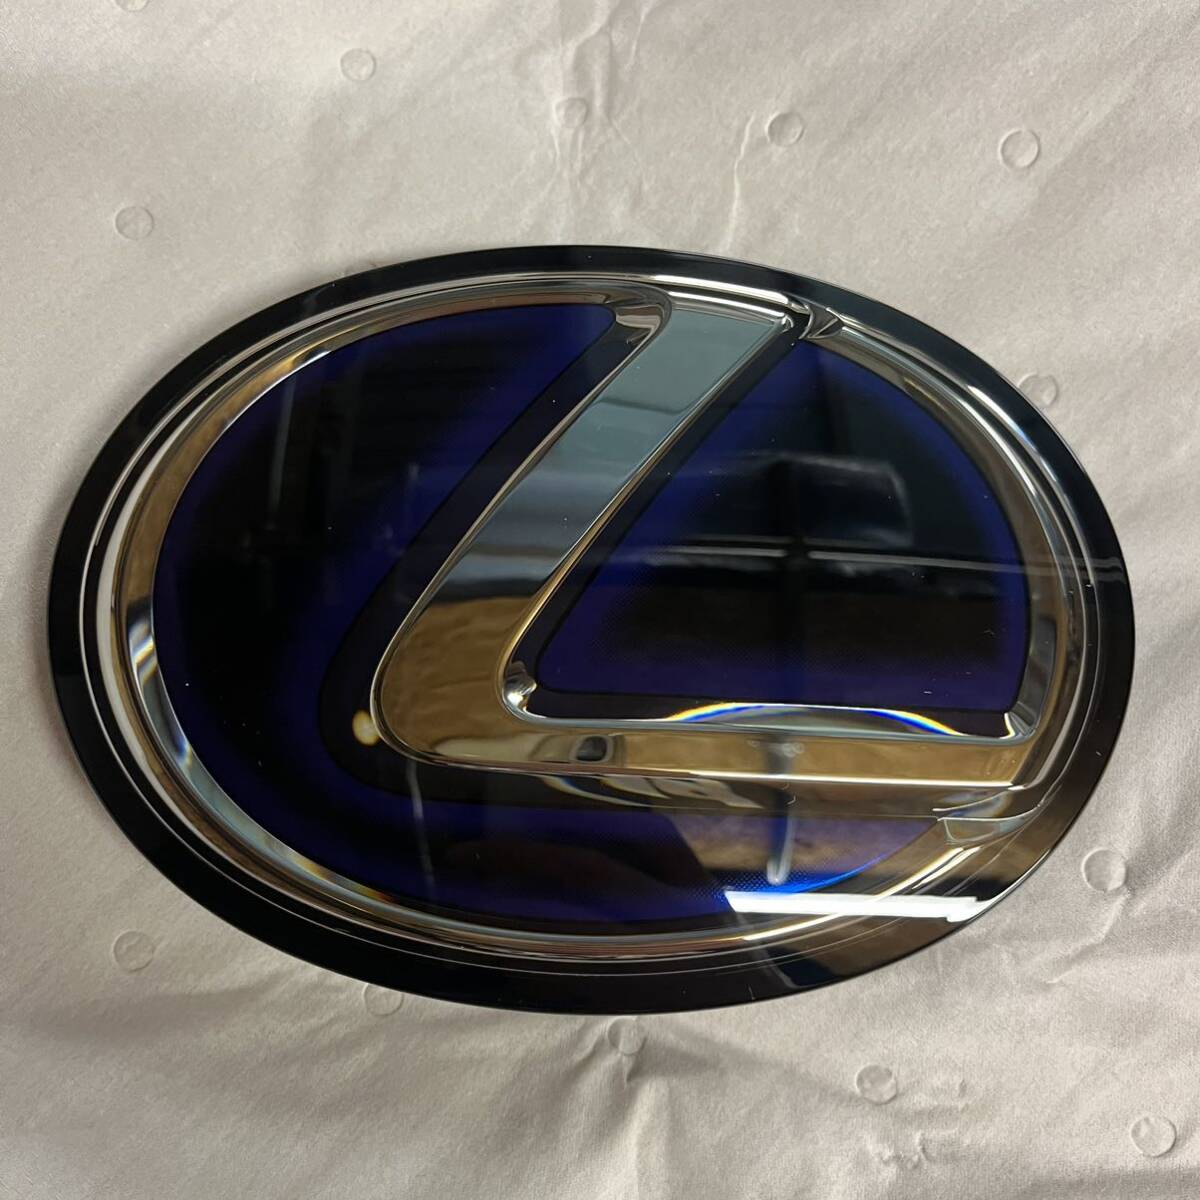  новый товар Lexus передний эмблема решётка эмблема 53141-53041 16.5cm 12cm нагрев голубой 165mm 120mm hybrid 